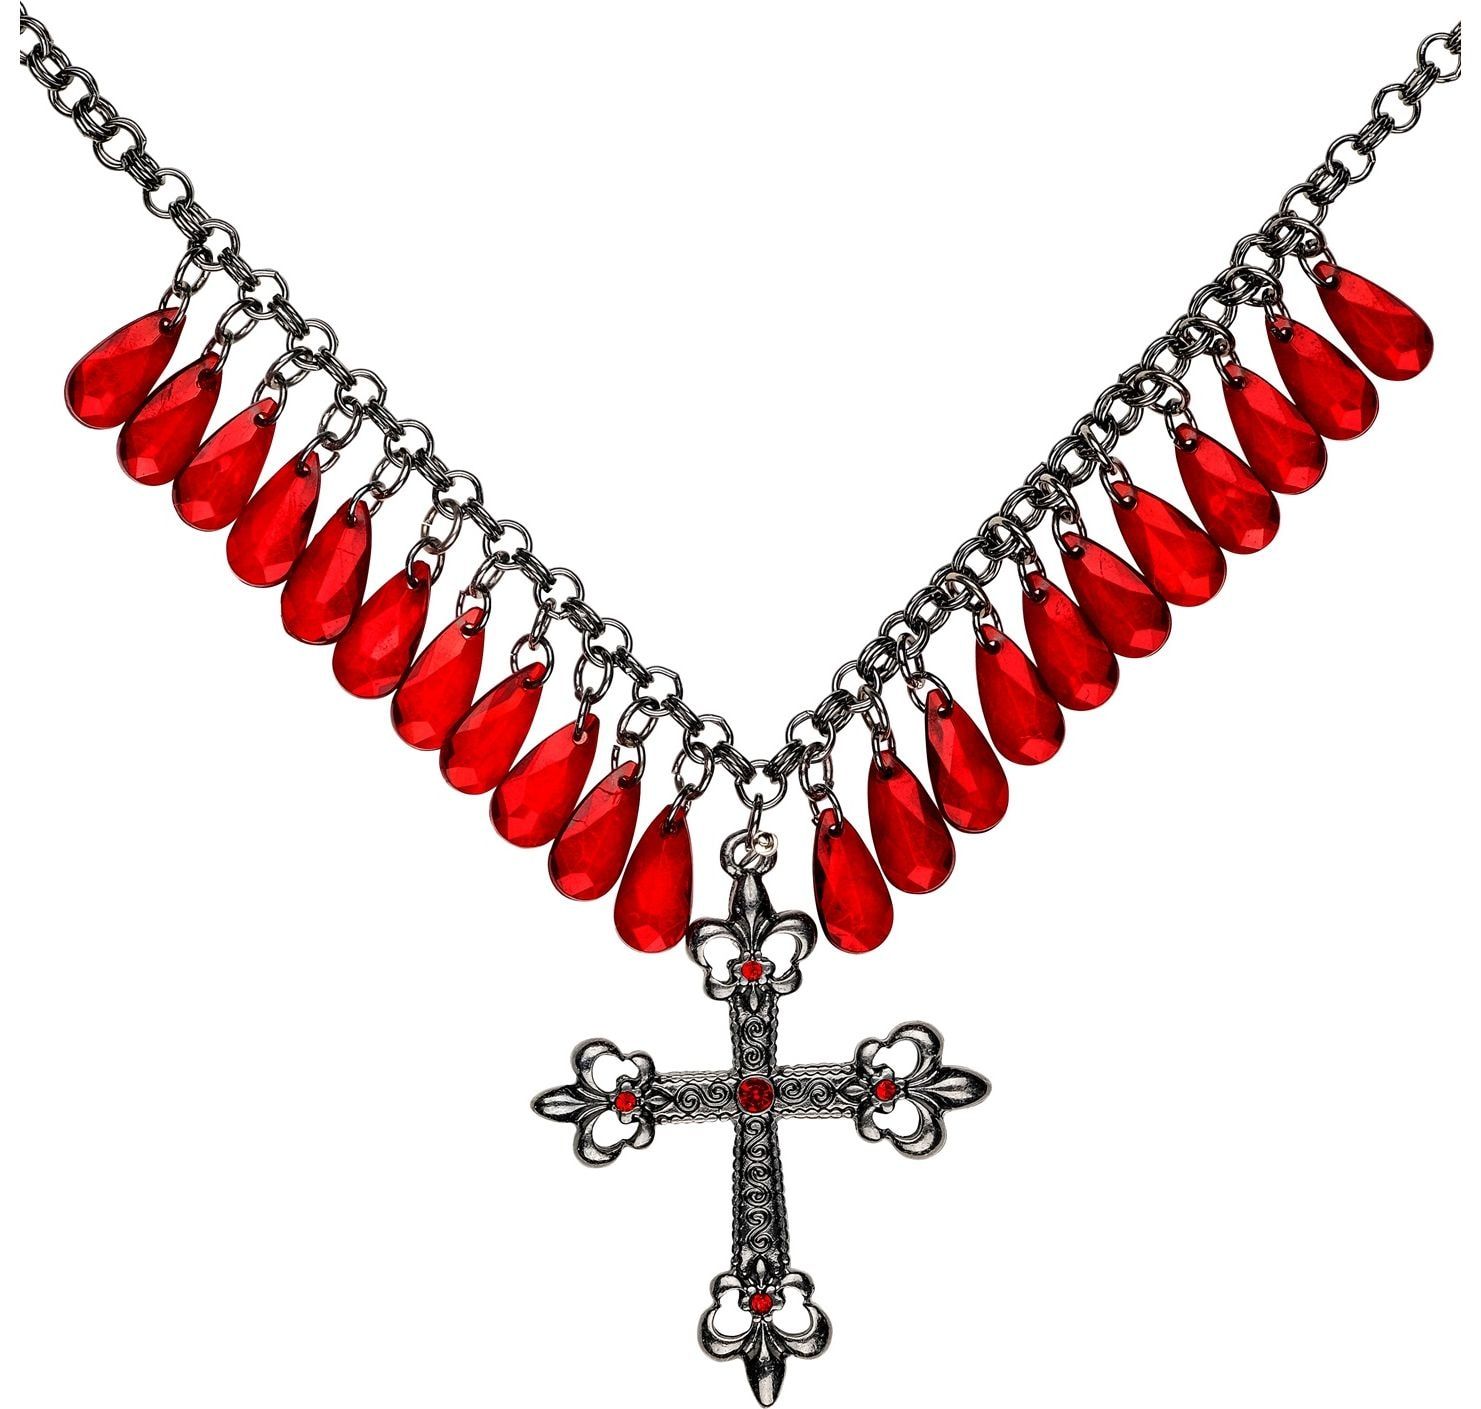 Rode gothic kruis ketting